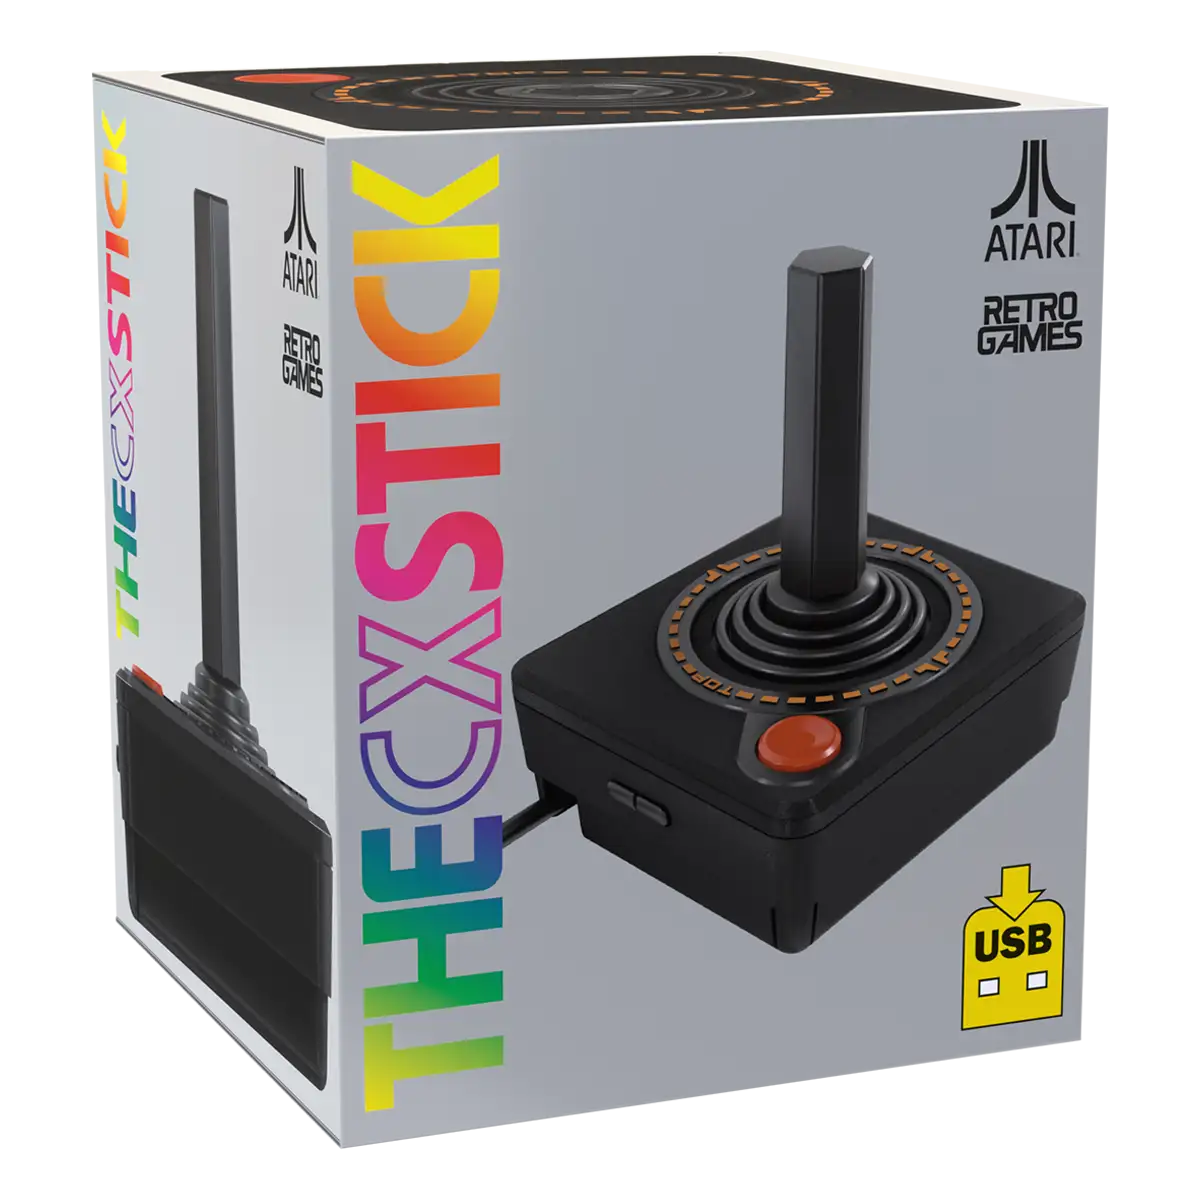 THECXSTICK (Solus Atari USB Joystick - Black) Thumbnail 1